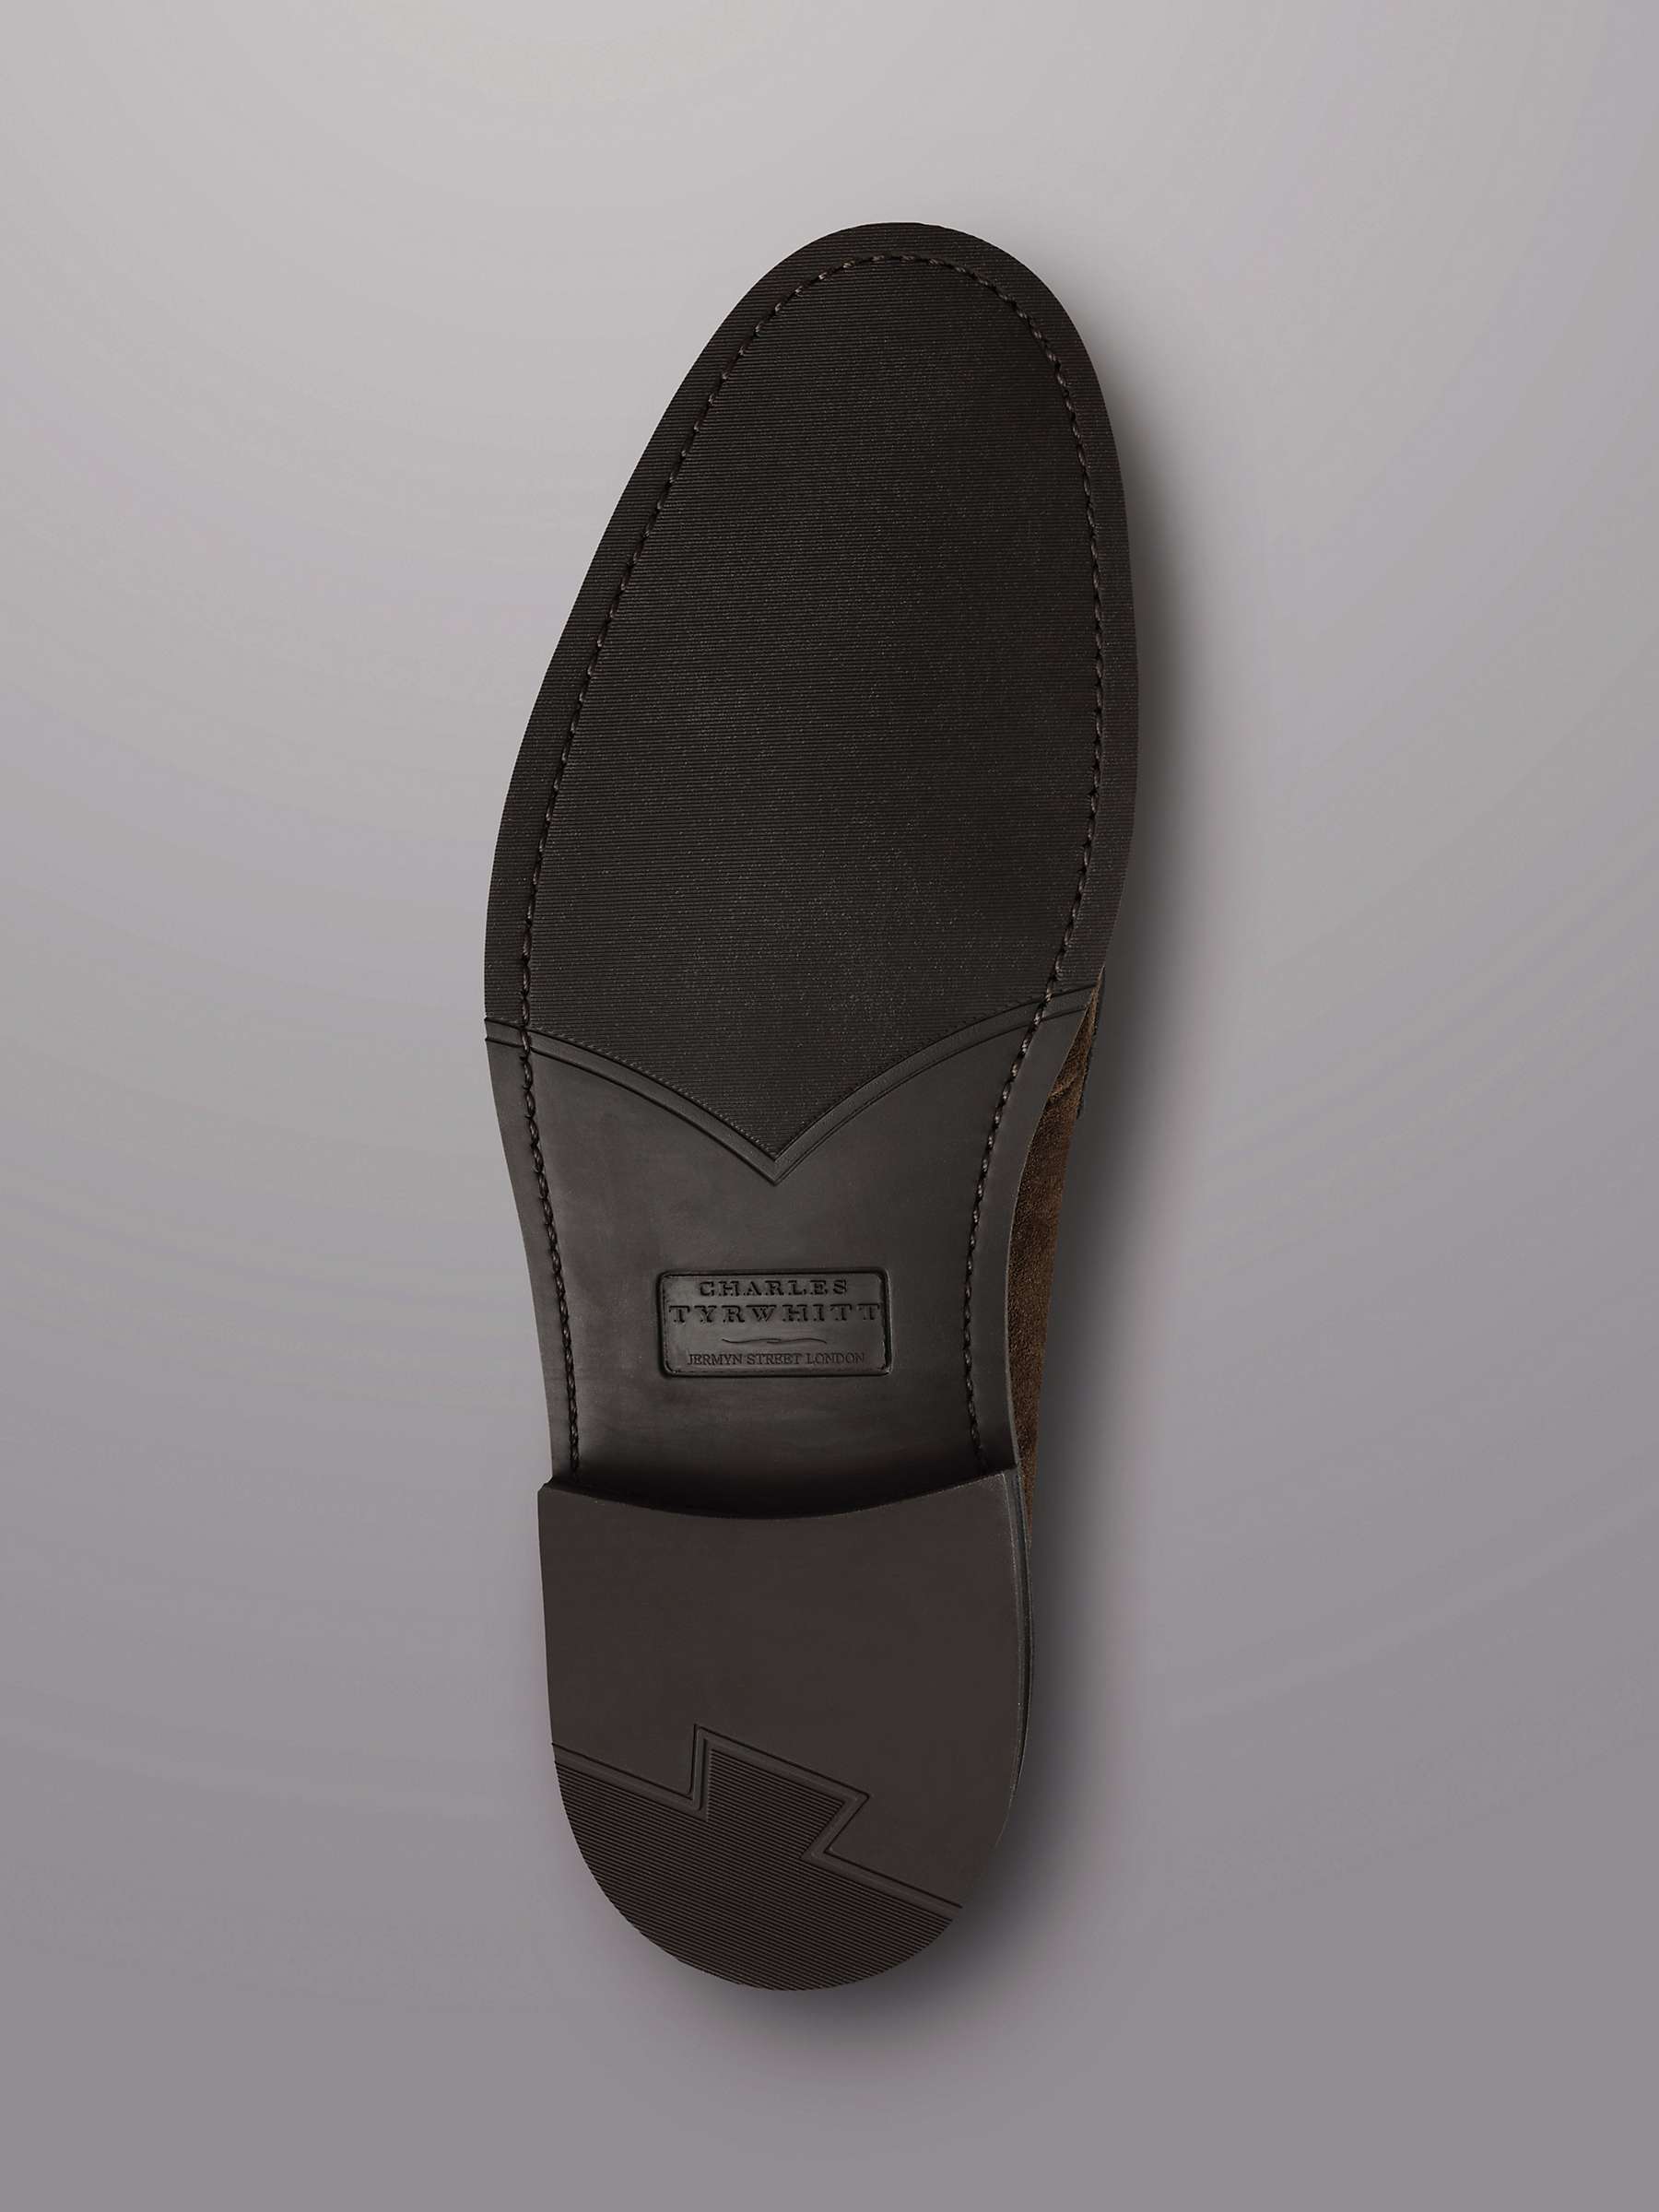 Buy Charles Tyrwhitt Suede Derby Shoes, Walnut Brown Online at johnlewis.com